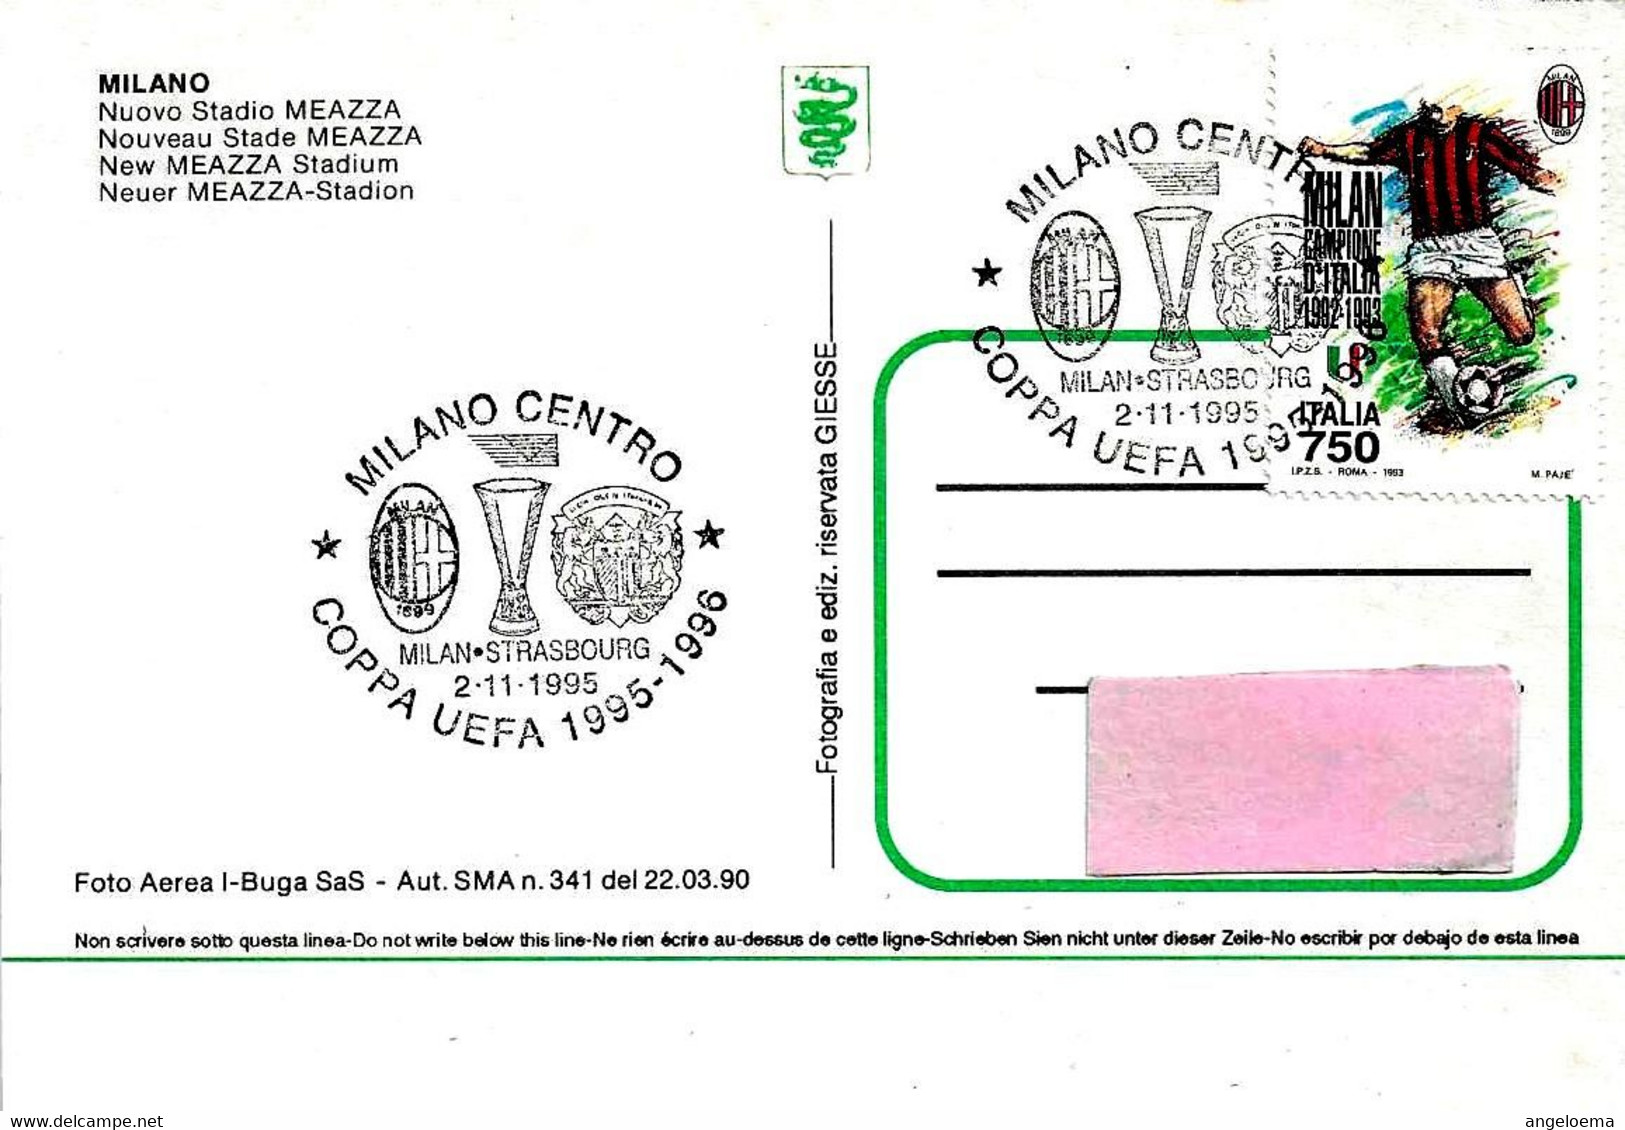 ITALIA - 1995 MILANO Coppa Uefa Partita Calcio MILAN-STRASBOURG Su Cartolina Illustrata Stadio Meazza - 5598 - Equipos Famosos